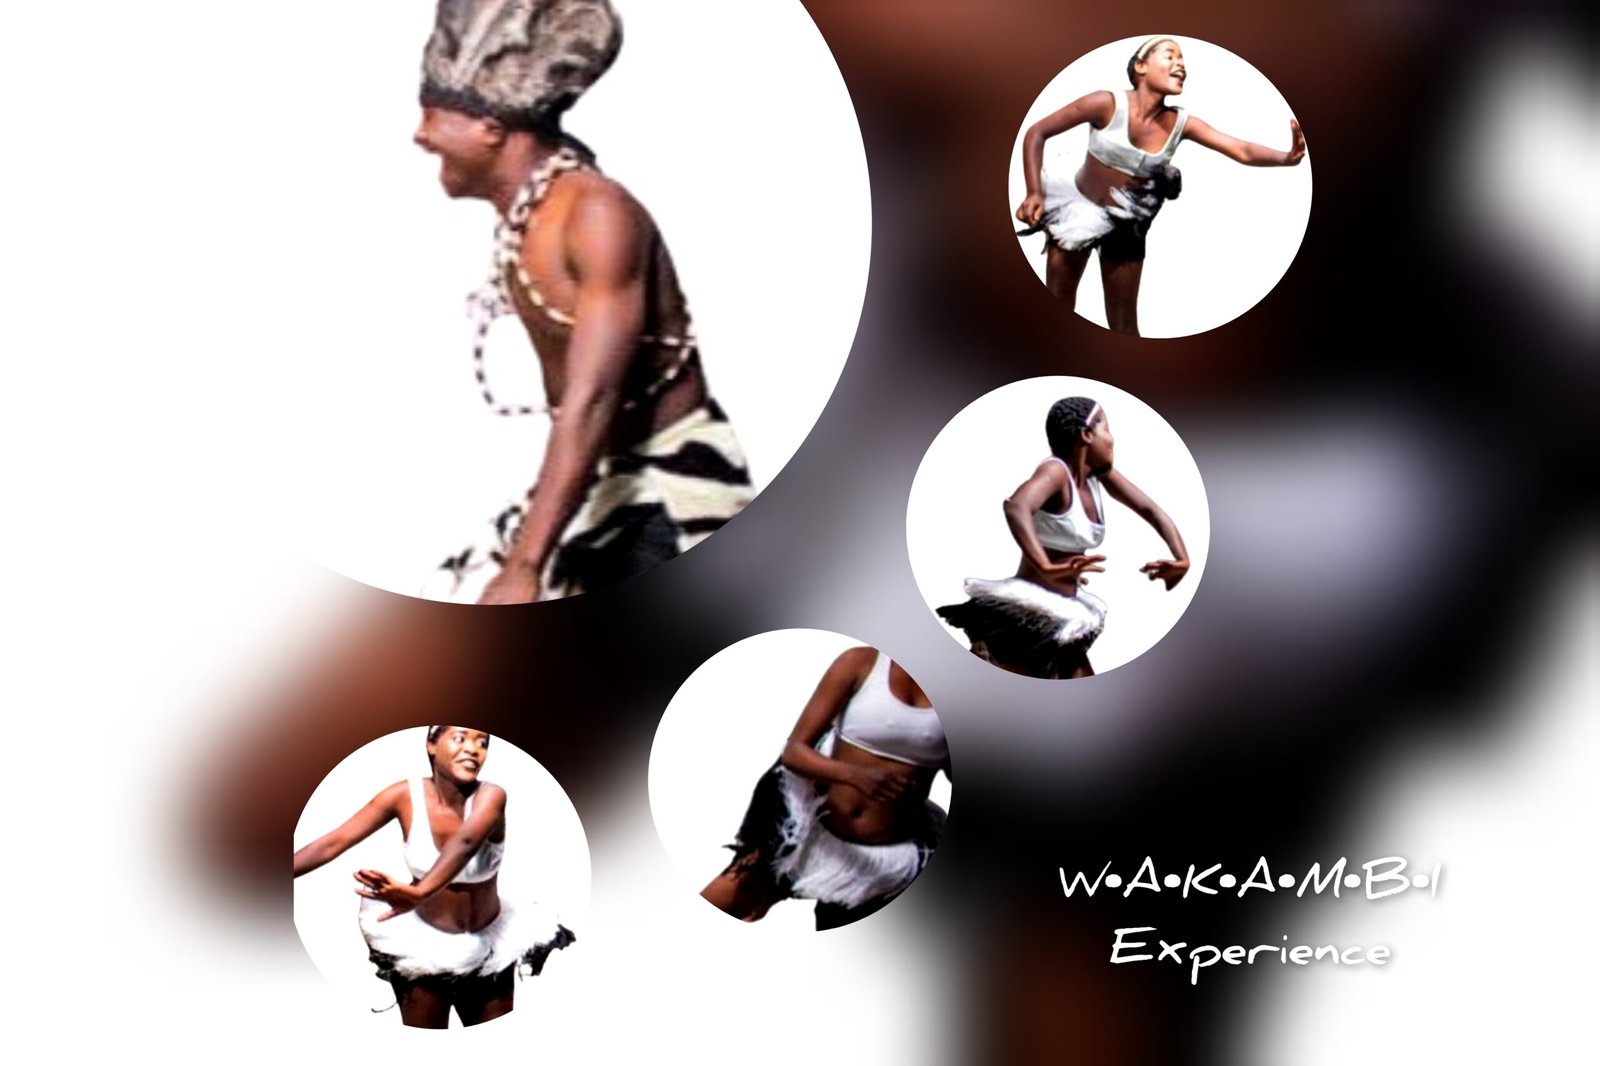 Wakambi Experience, Matabele Traditional Music and Dance